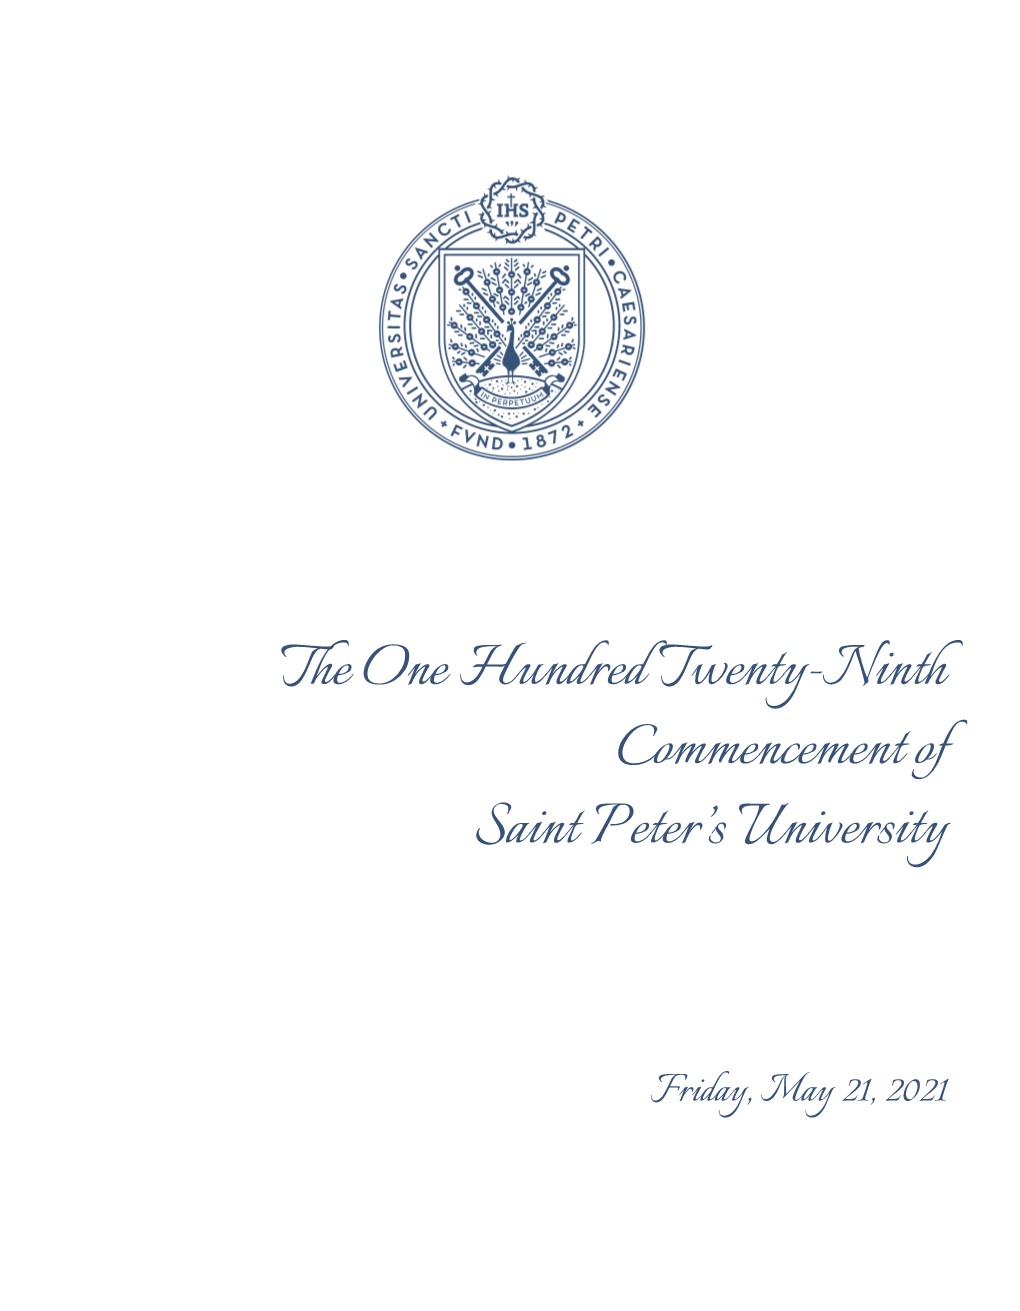 The One Hundred Twenty-Ninth Commencement of Saint Peter's University